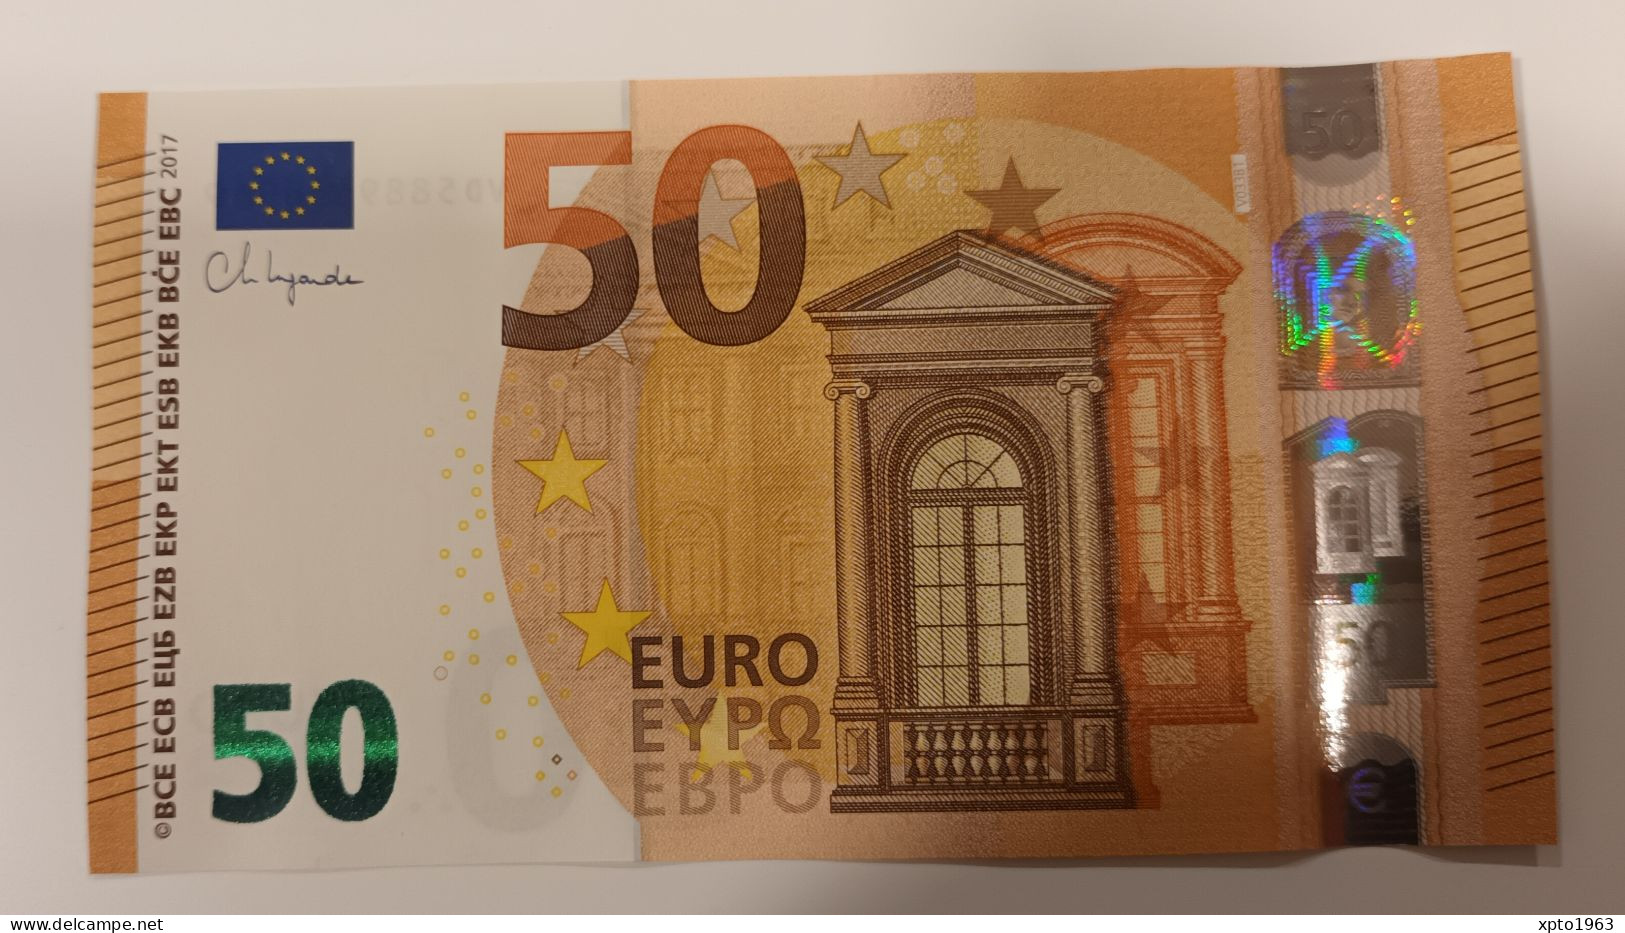 50 EURO SPAIN  - V033B1 - VD5889638969 - Lagarde - UNC - NEUF - S/C - 50 Euro